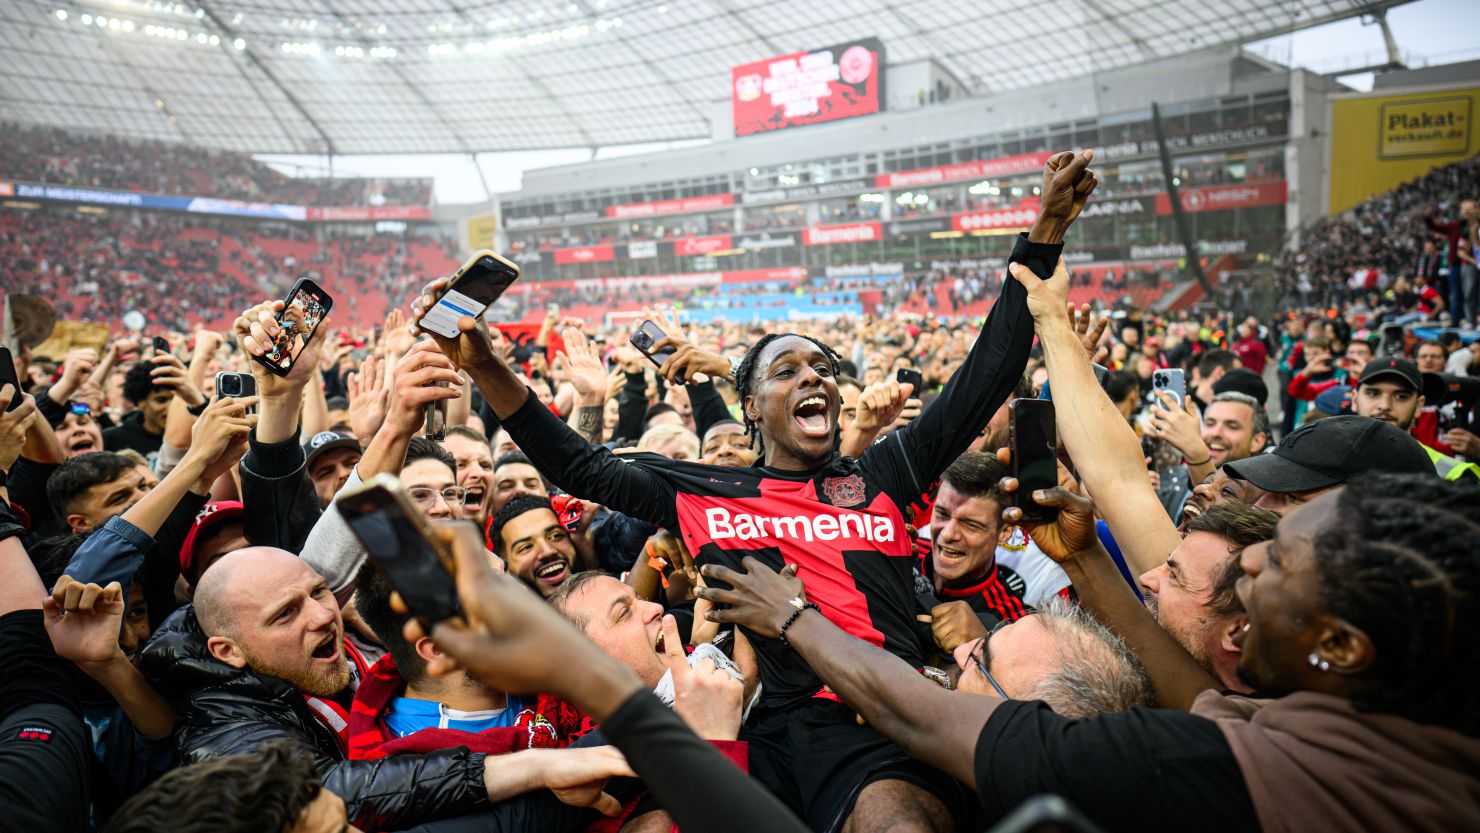 The winning of the Bundesliga title went some ways towards banishing the demons of days gone by for Bayer Leverkusen.